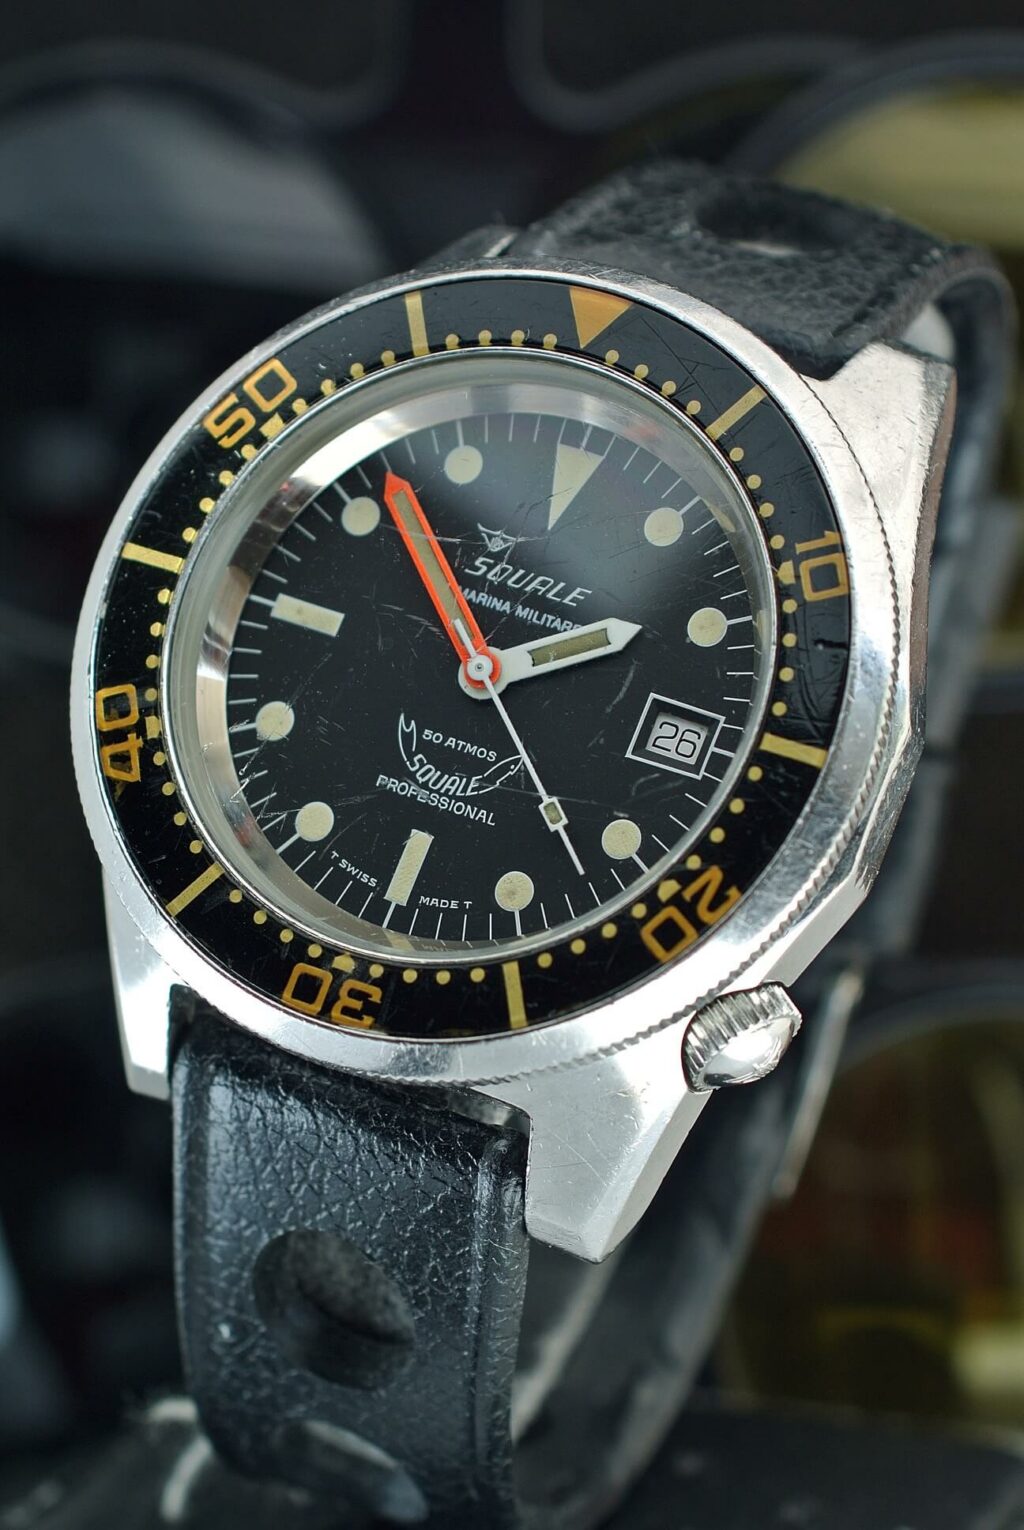 Vintage Squale Marina Militare 1980s dive watch